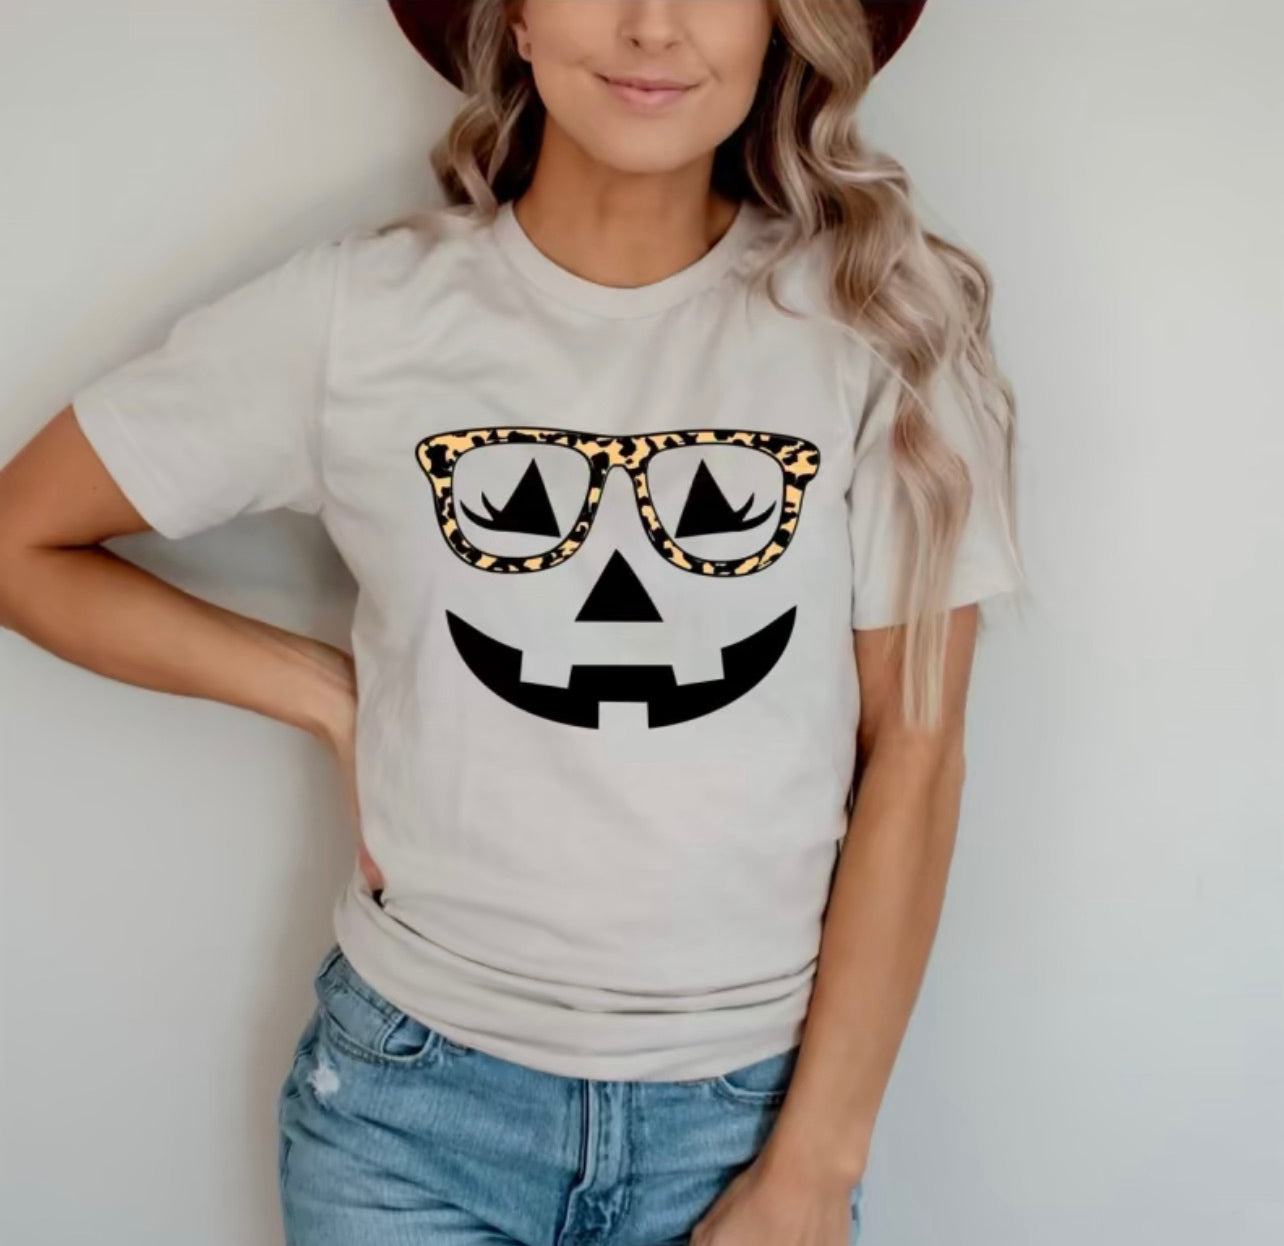 Glasses Pumpkin face tee| Halloween shirt| Fall vibes shirt| Fall shirt| Pumpkin shirts| Fall life shirt| Halloween tee